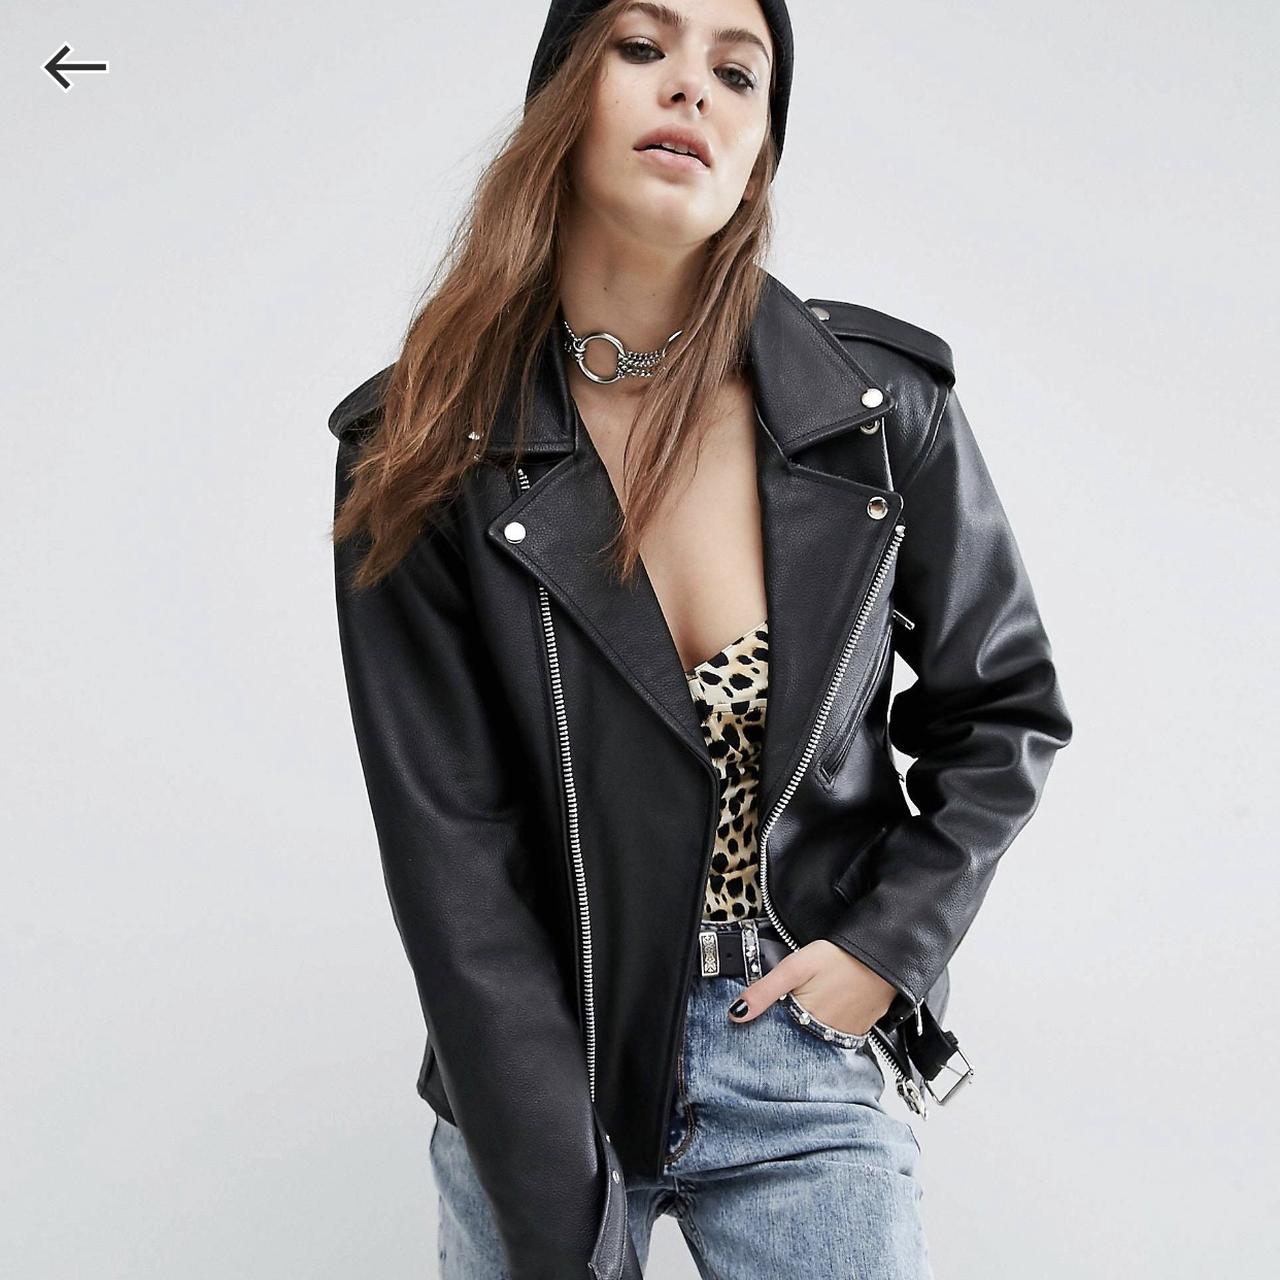 Reclaimed Vintage leather biker jacket in black